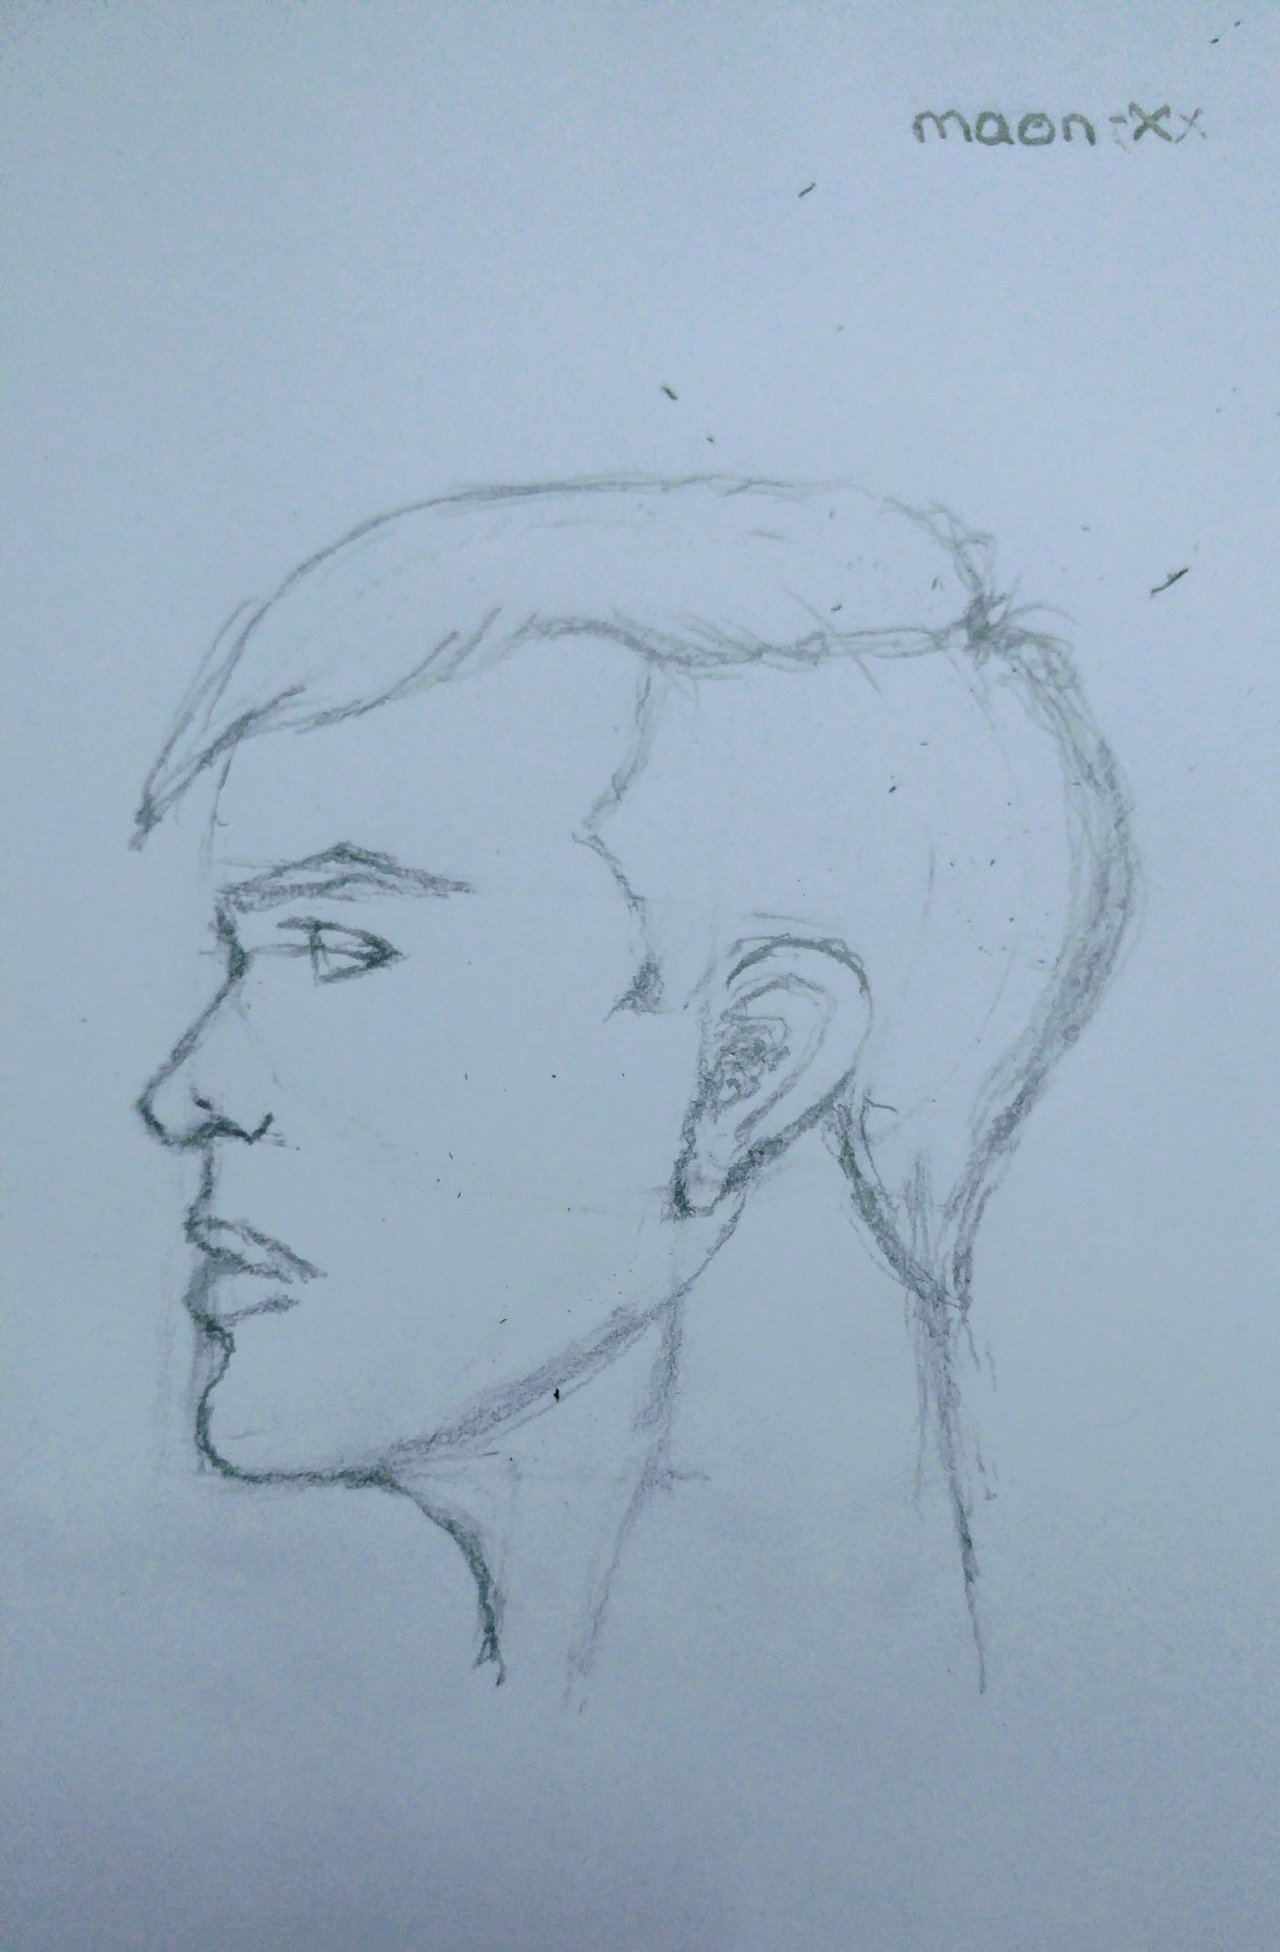 Yan Profilden Yuz Cizimi Face Drawing From Side Profile